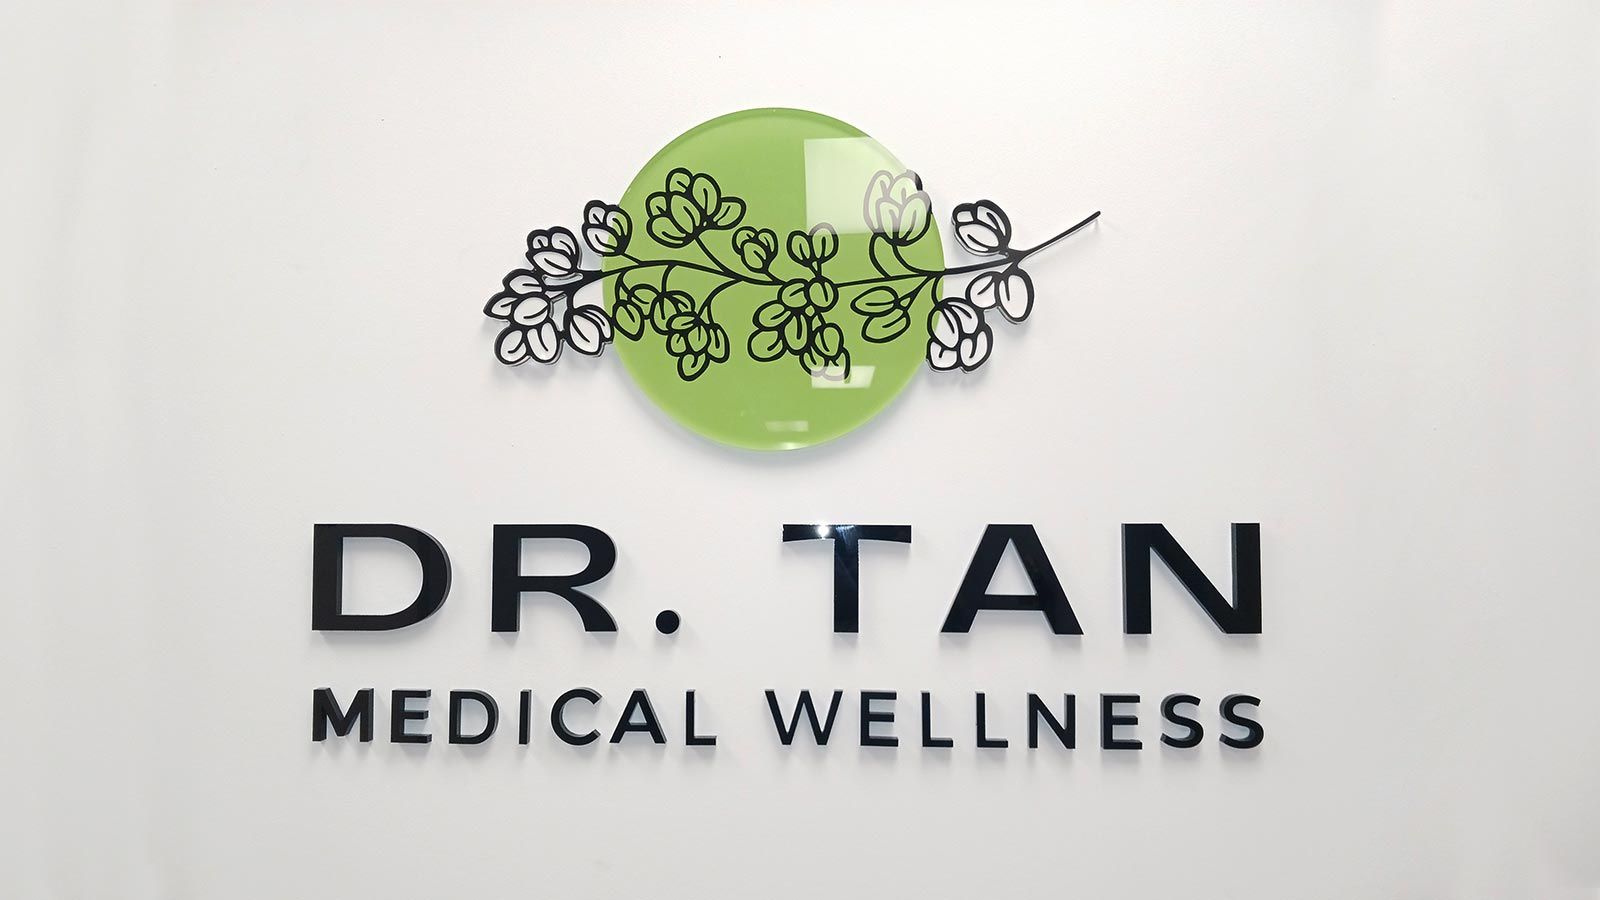 Dr. Tan Medical Wellness interior sign for office design